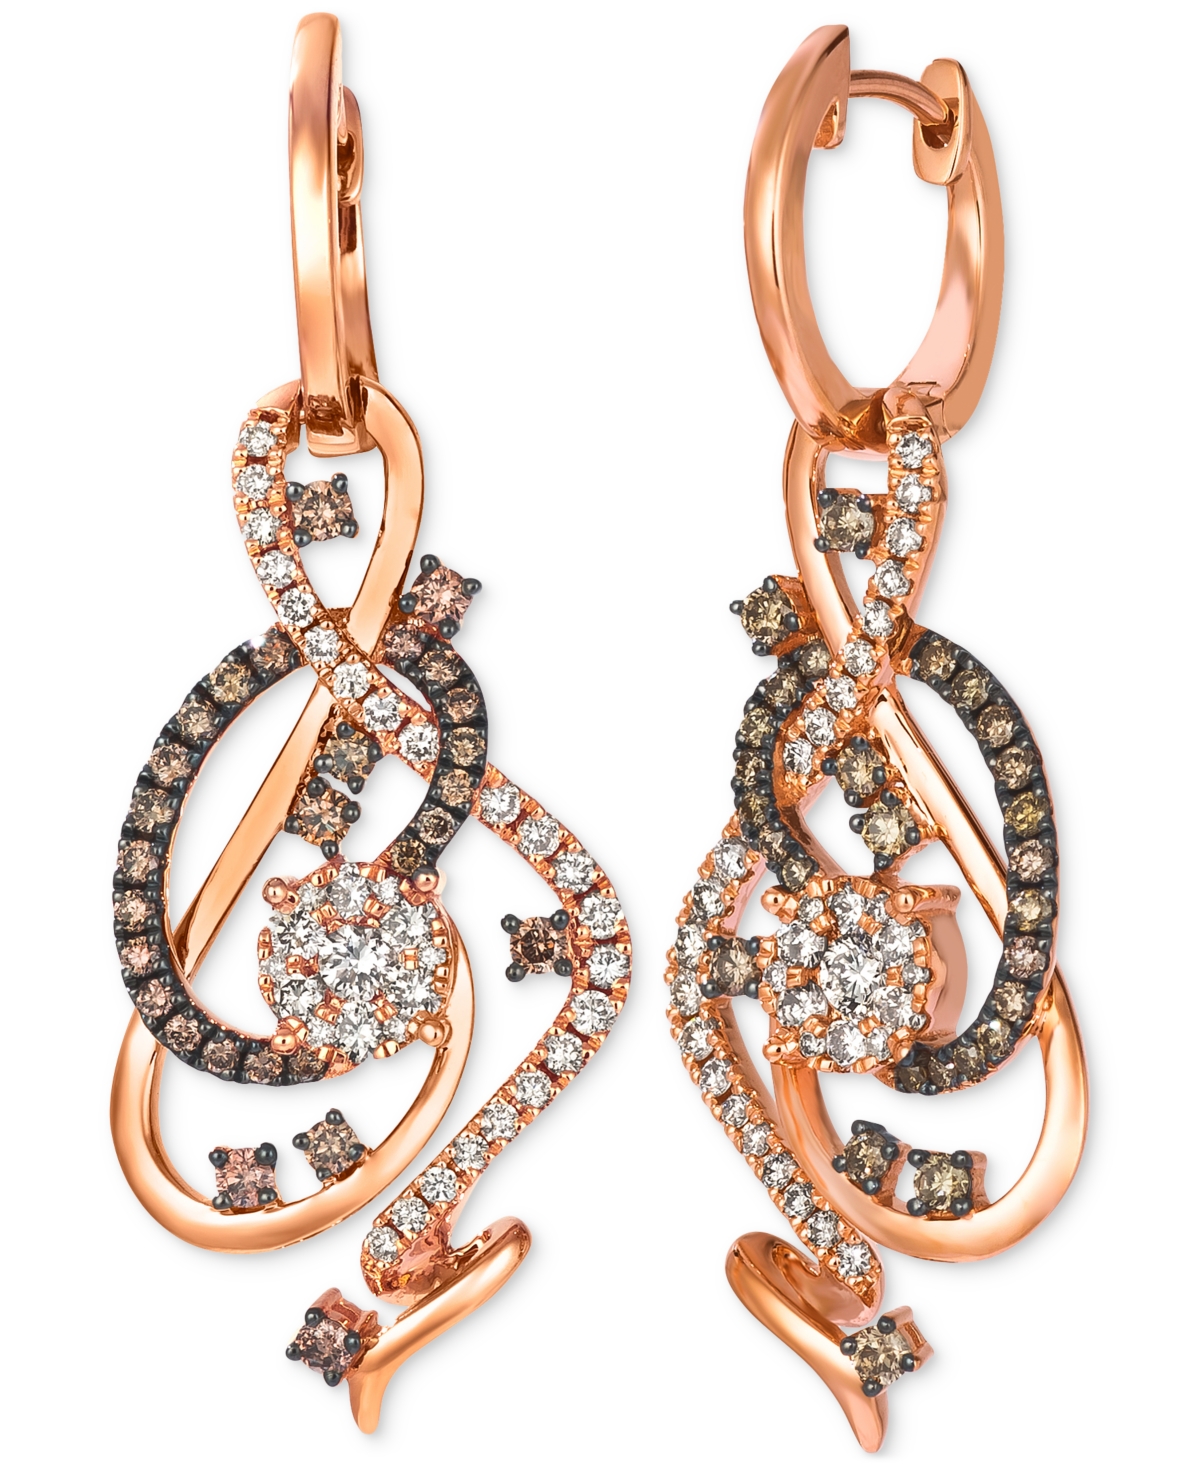 Crazy Collection Chocolate Diamond & Nude Diamond Swirl Drop Earrings (1-1/2 ct. t.w.) in 14k Rose Gold